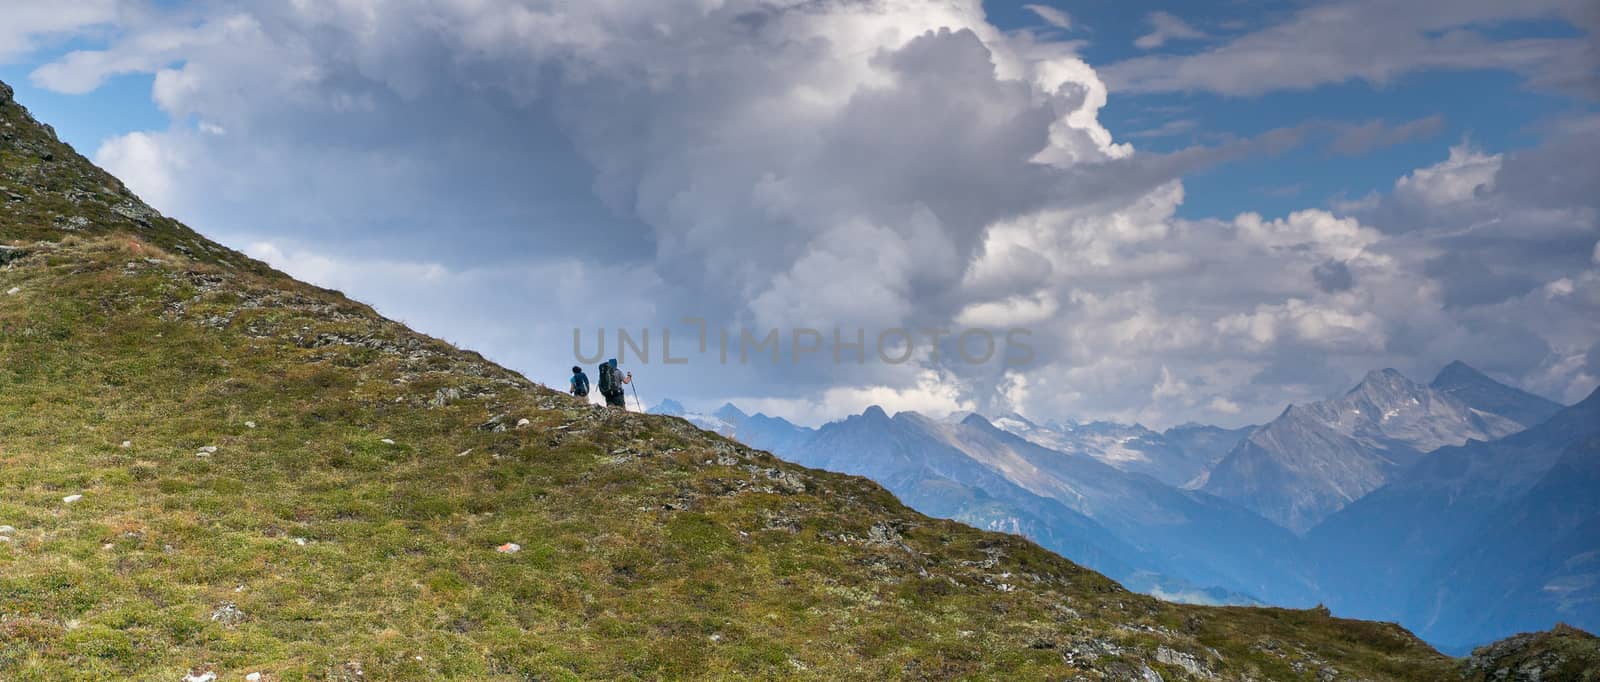 Trekking in Summer Alps landscape of Tyrol by javax